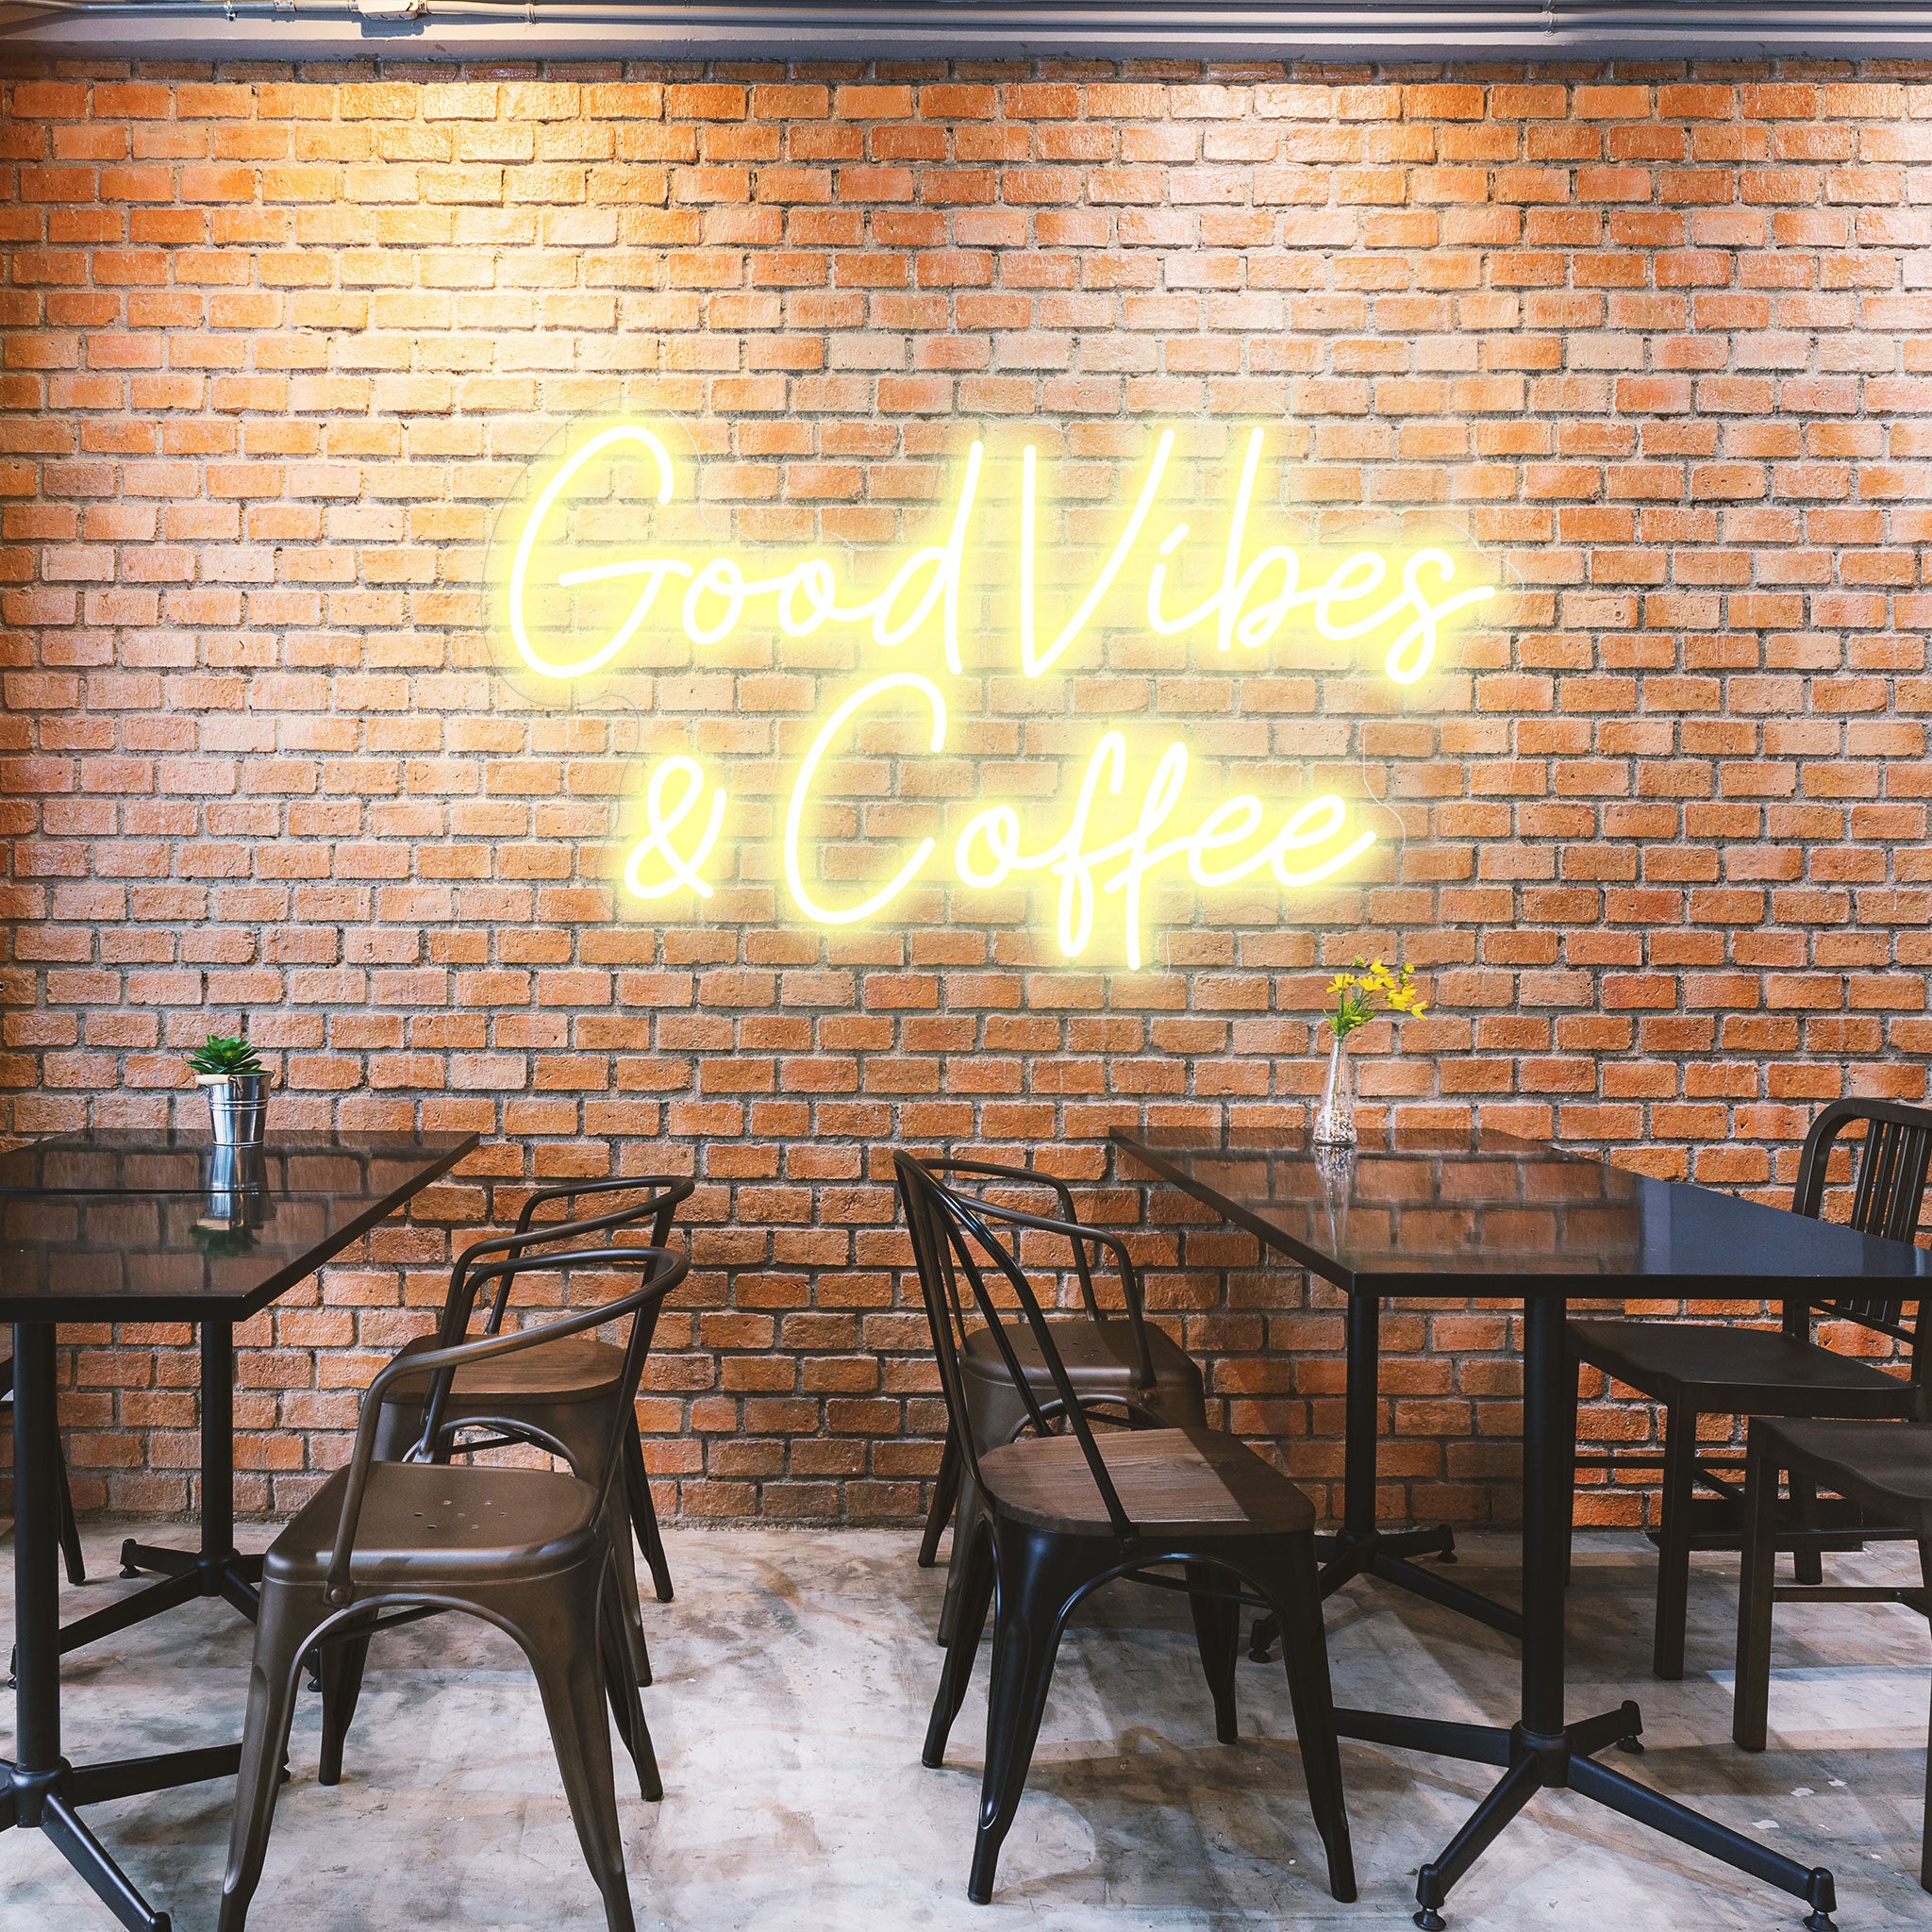 Good Vibes & Coffee - Neon Sign - Café Venue